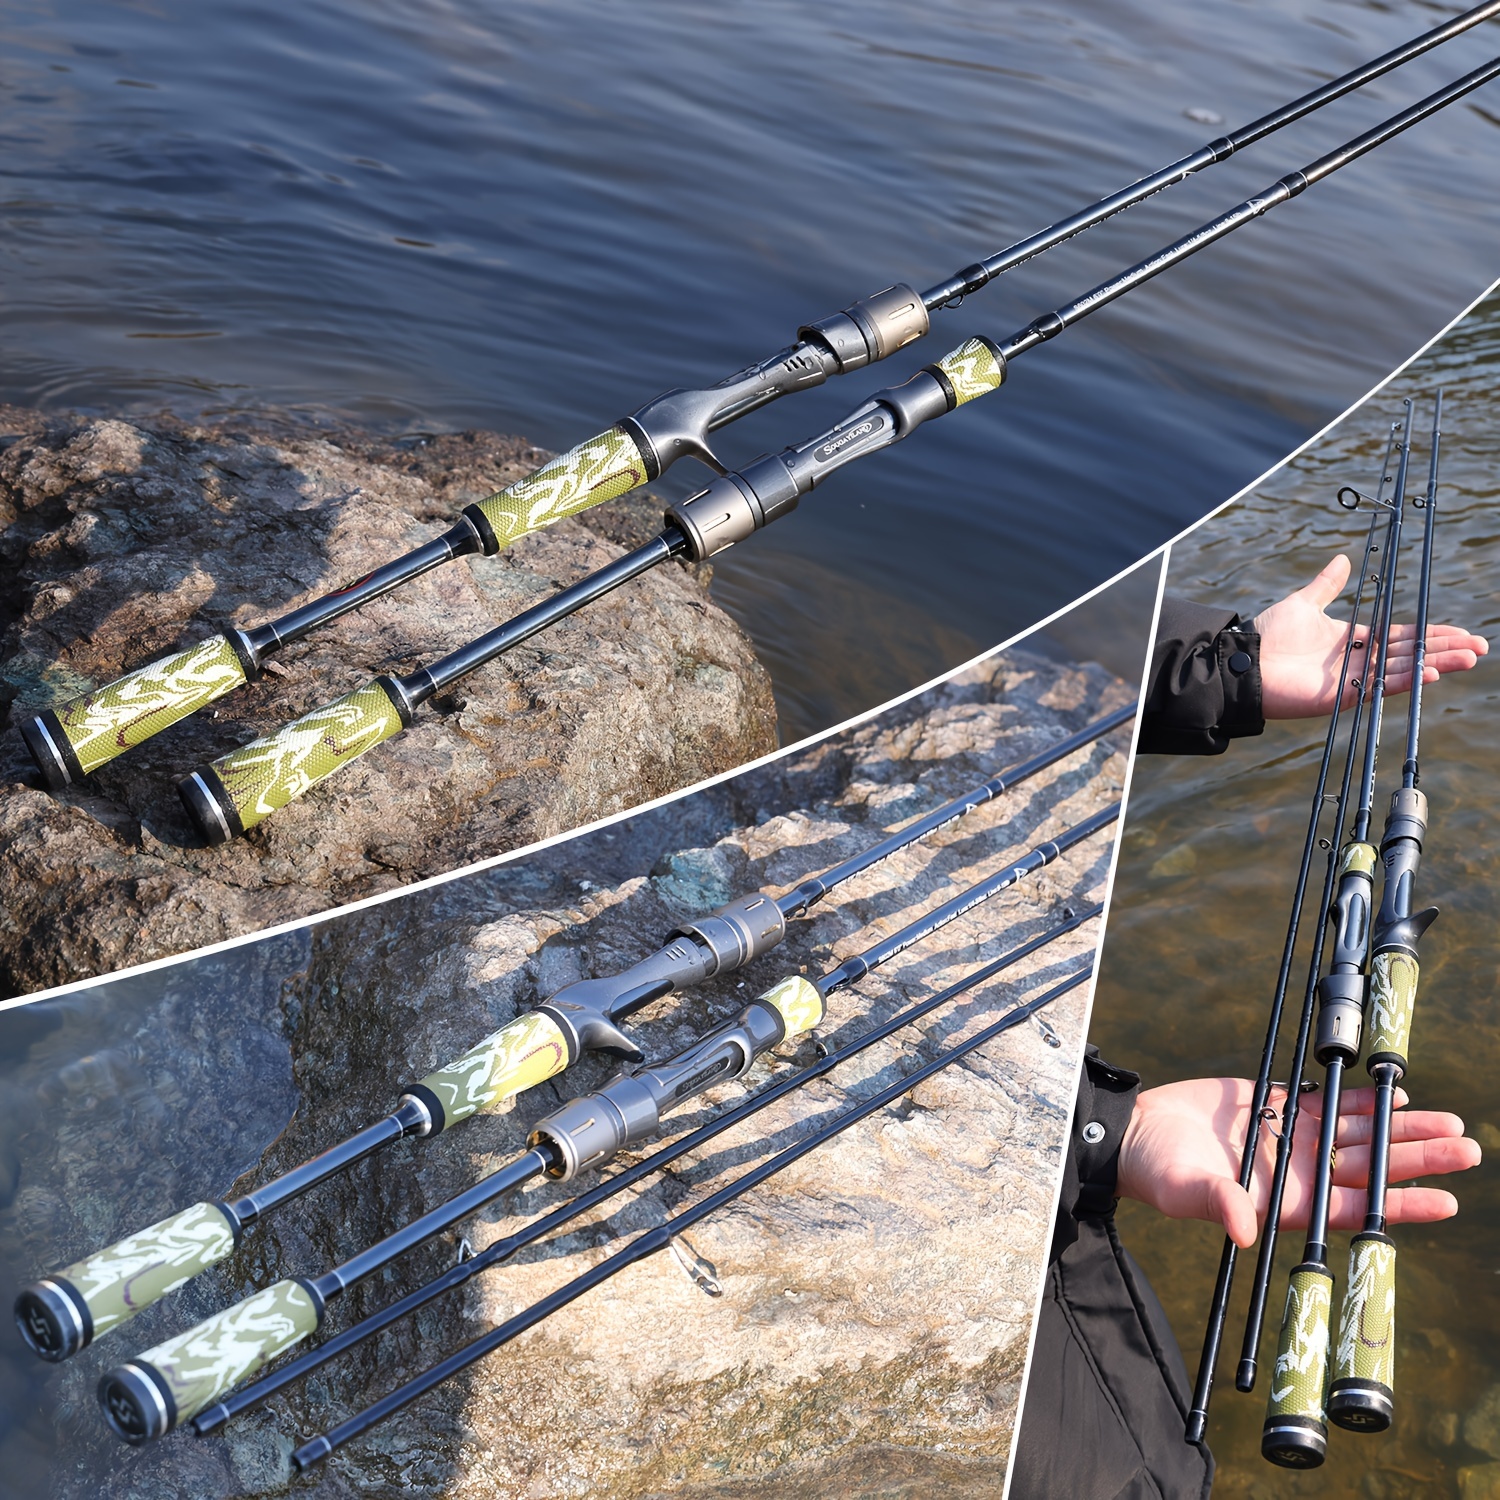 Sougayilang Fishing Rod Reel Combo, Fast Action 2 Pieces Fishing